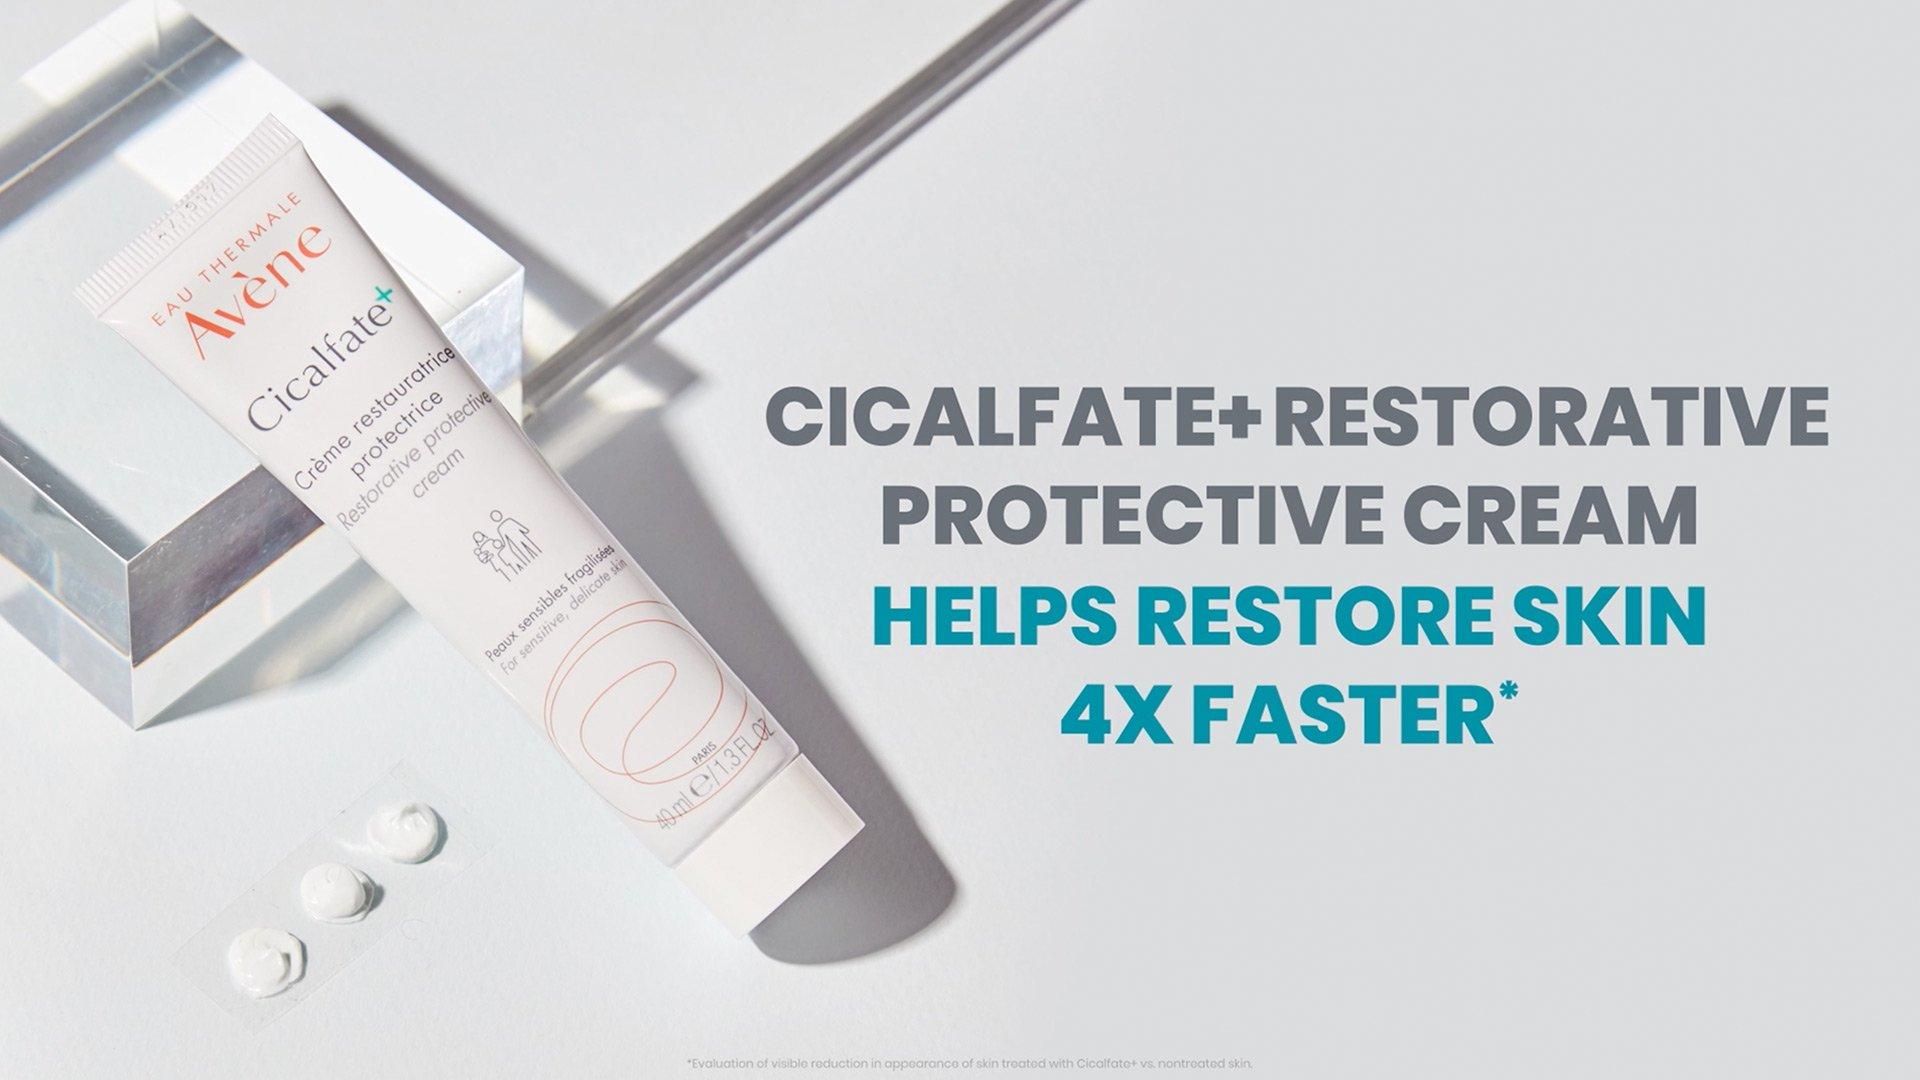 Avene Cicalfate Restorative Protective Cream empty with its